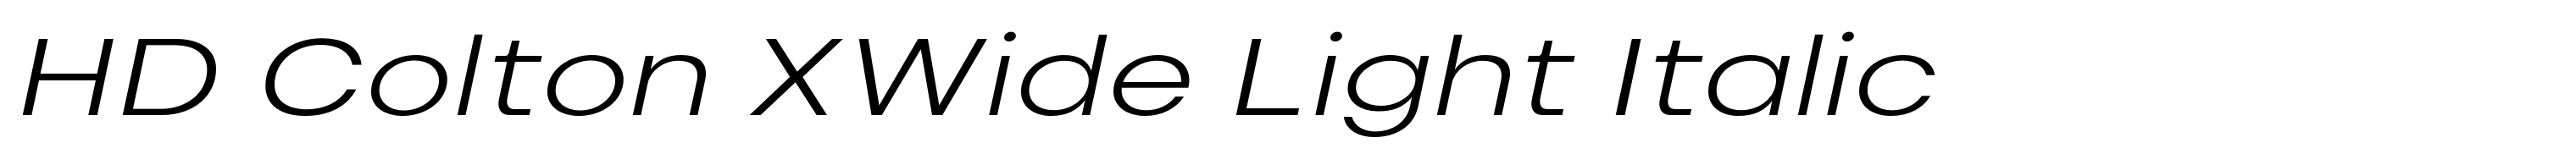 HD Colton XWide Light Italic